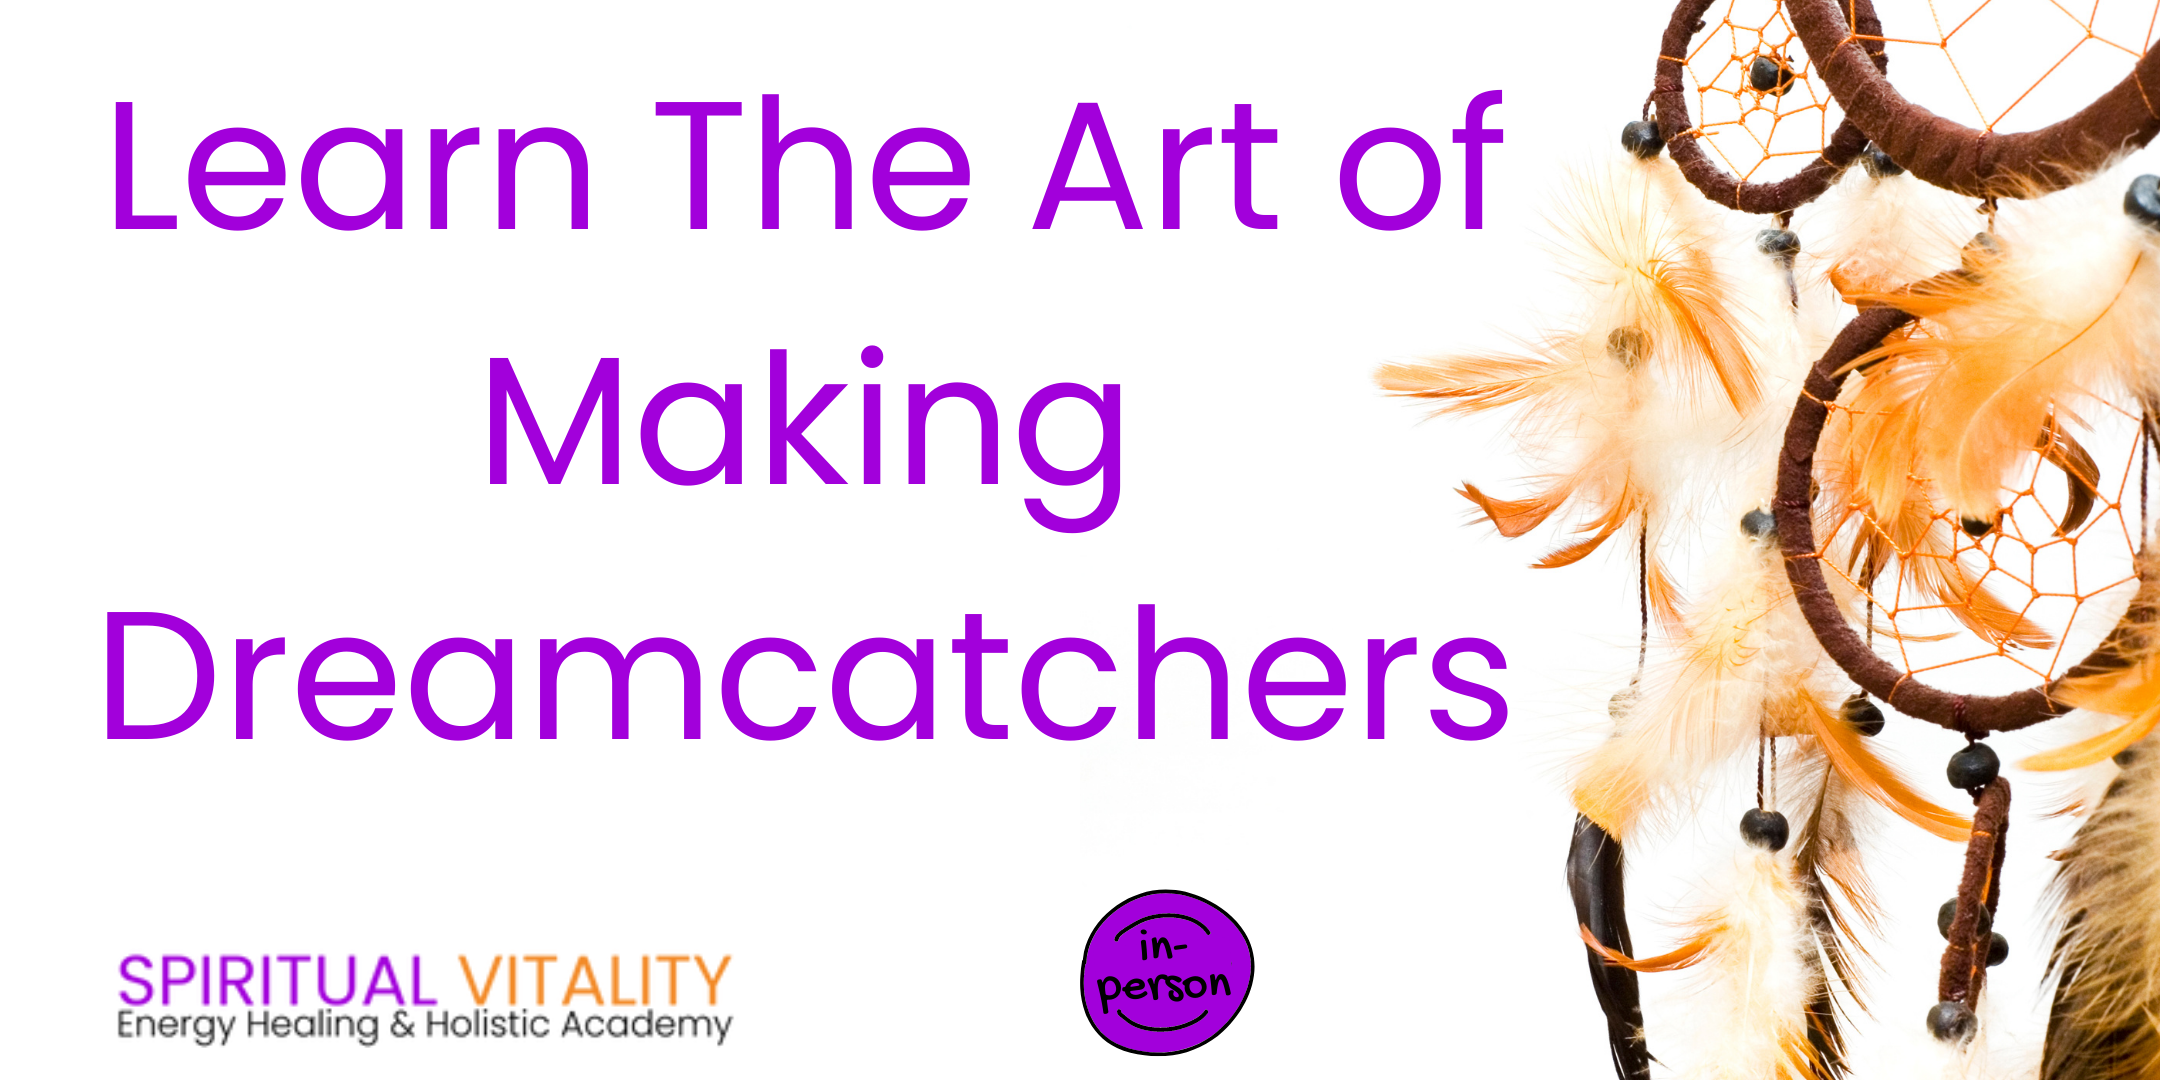 Learn the Art of making Dreamcatchers